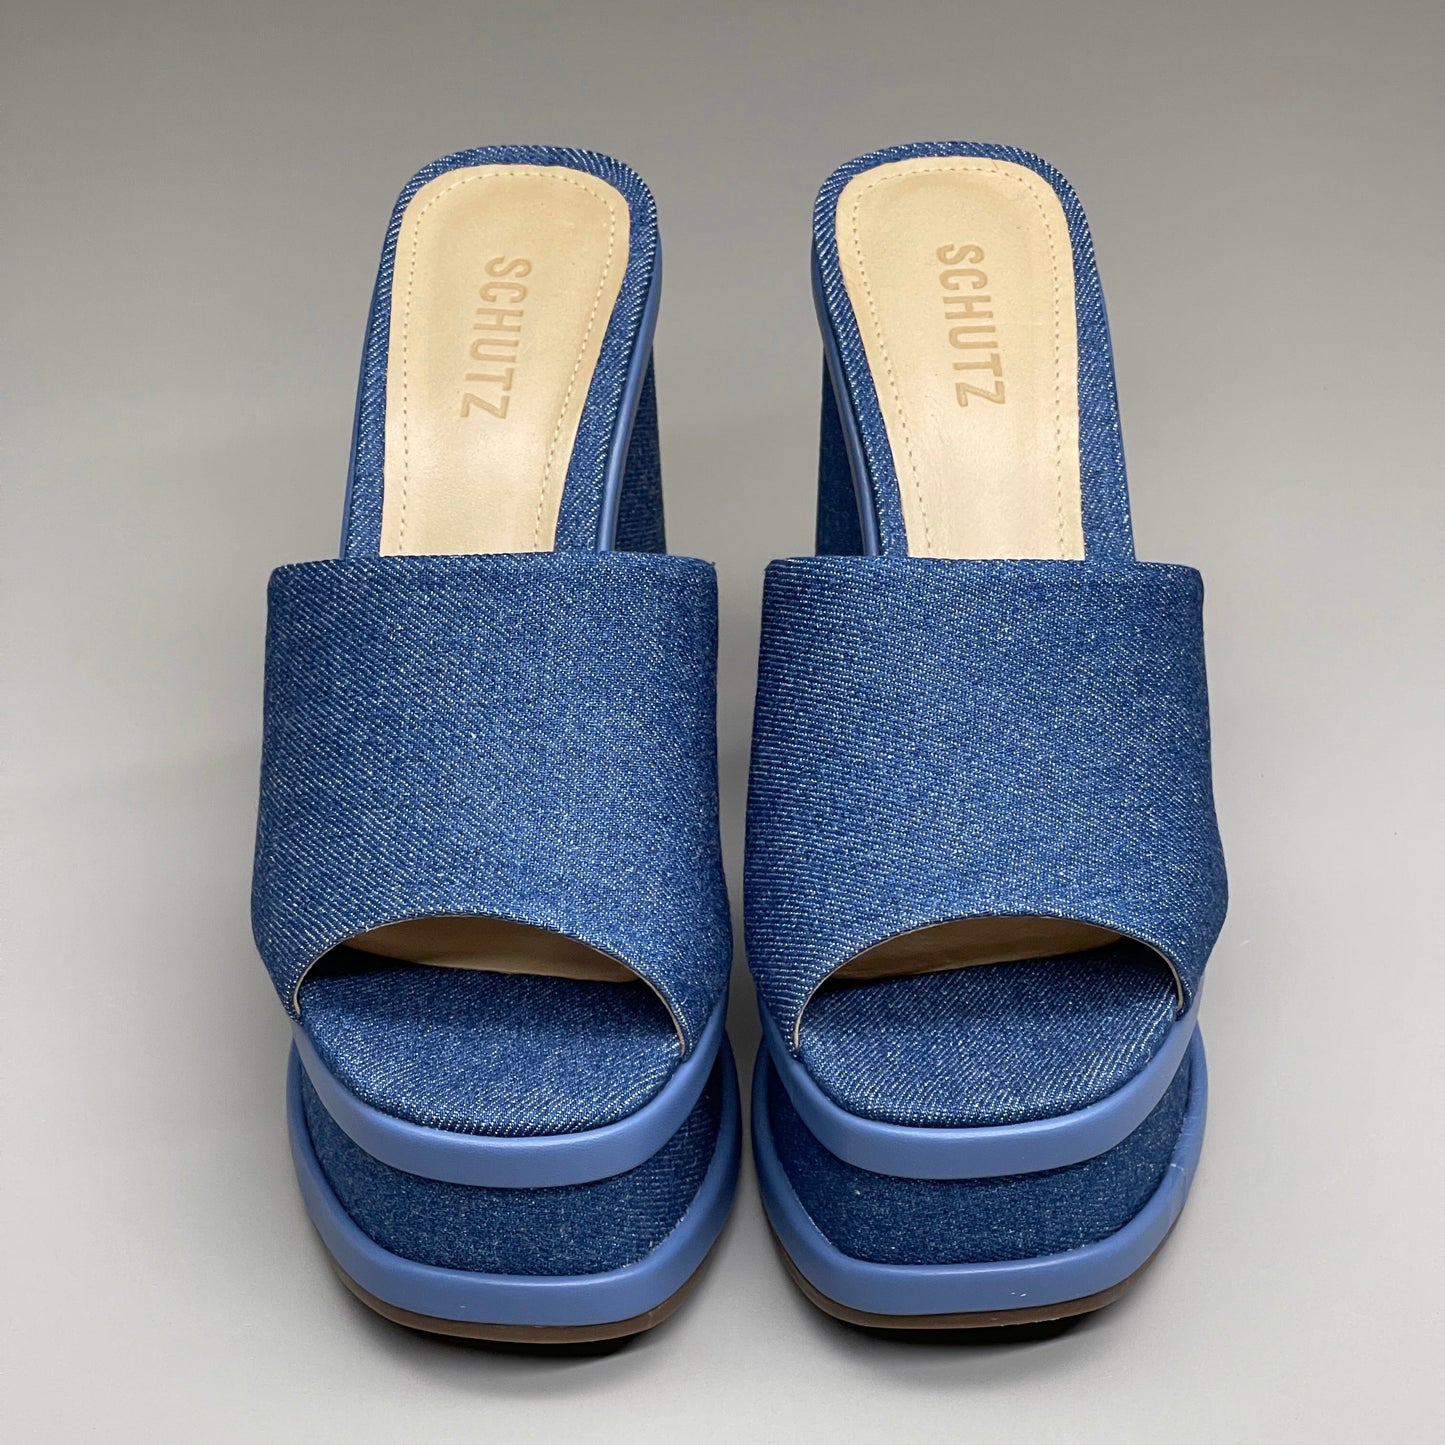 SCHUTZ Dalle Denim Women's Wedge Sandal Blue Platform Shoe Sz 11B (New)